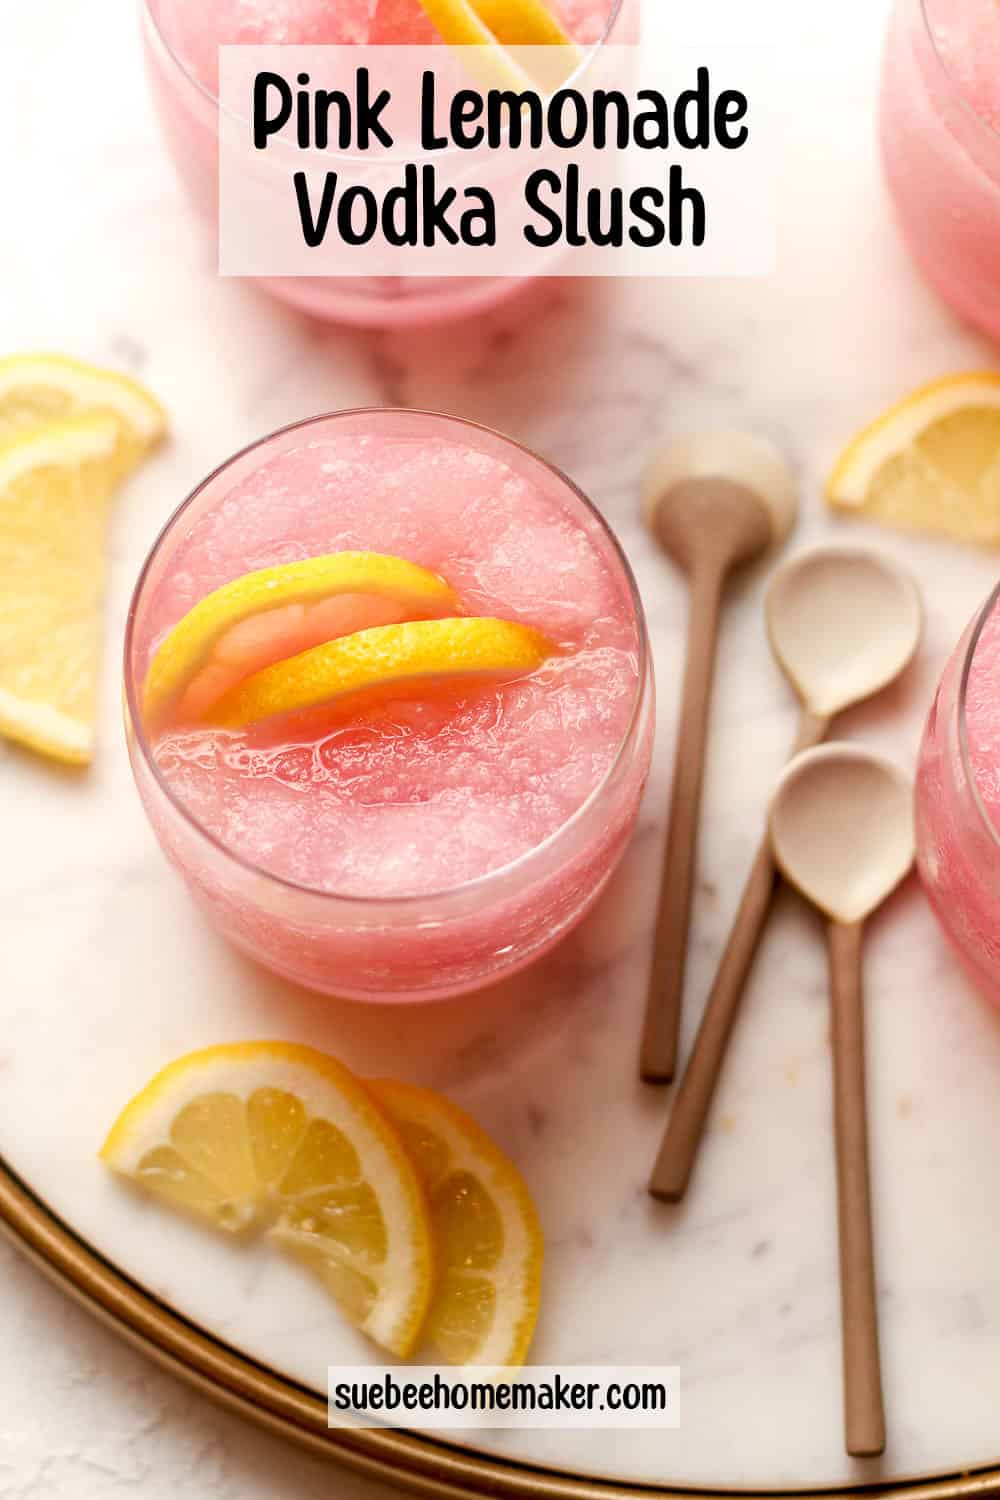 Overhead view of a tray of pink lemonade vodka slush drinks with lemon slices.